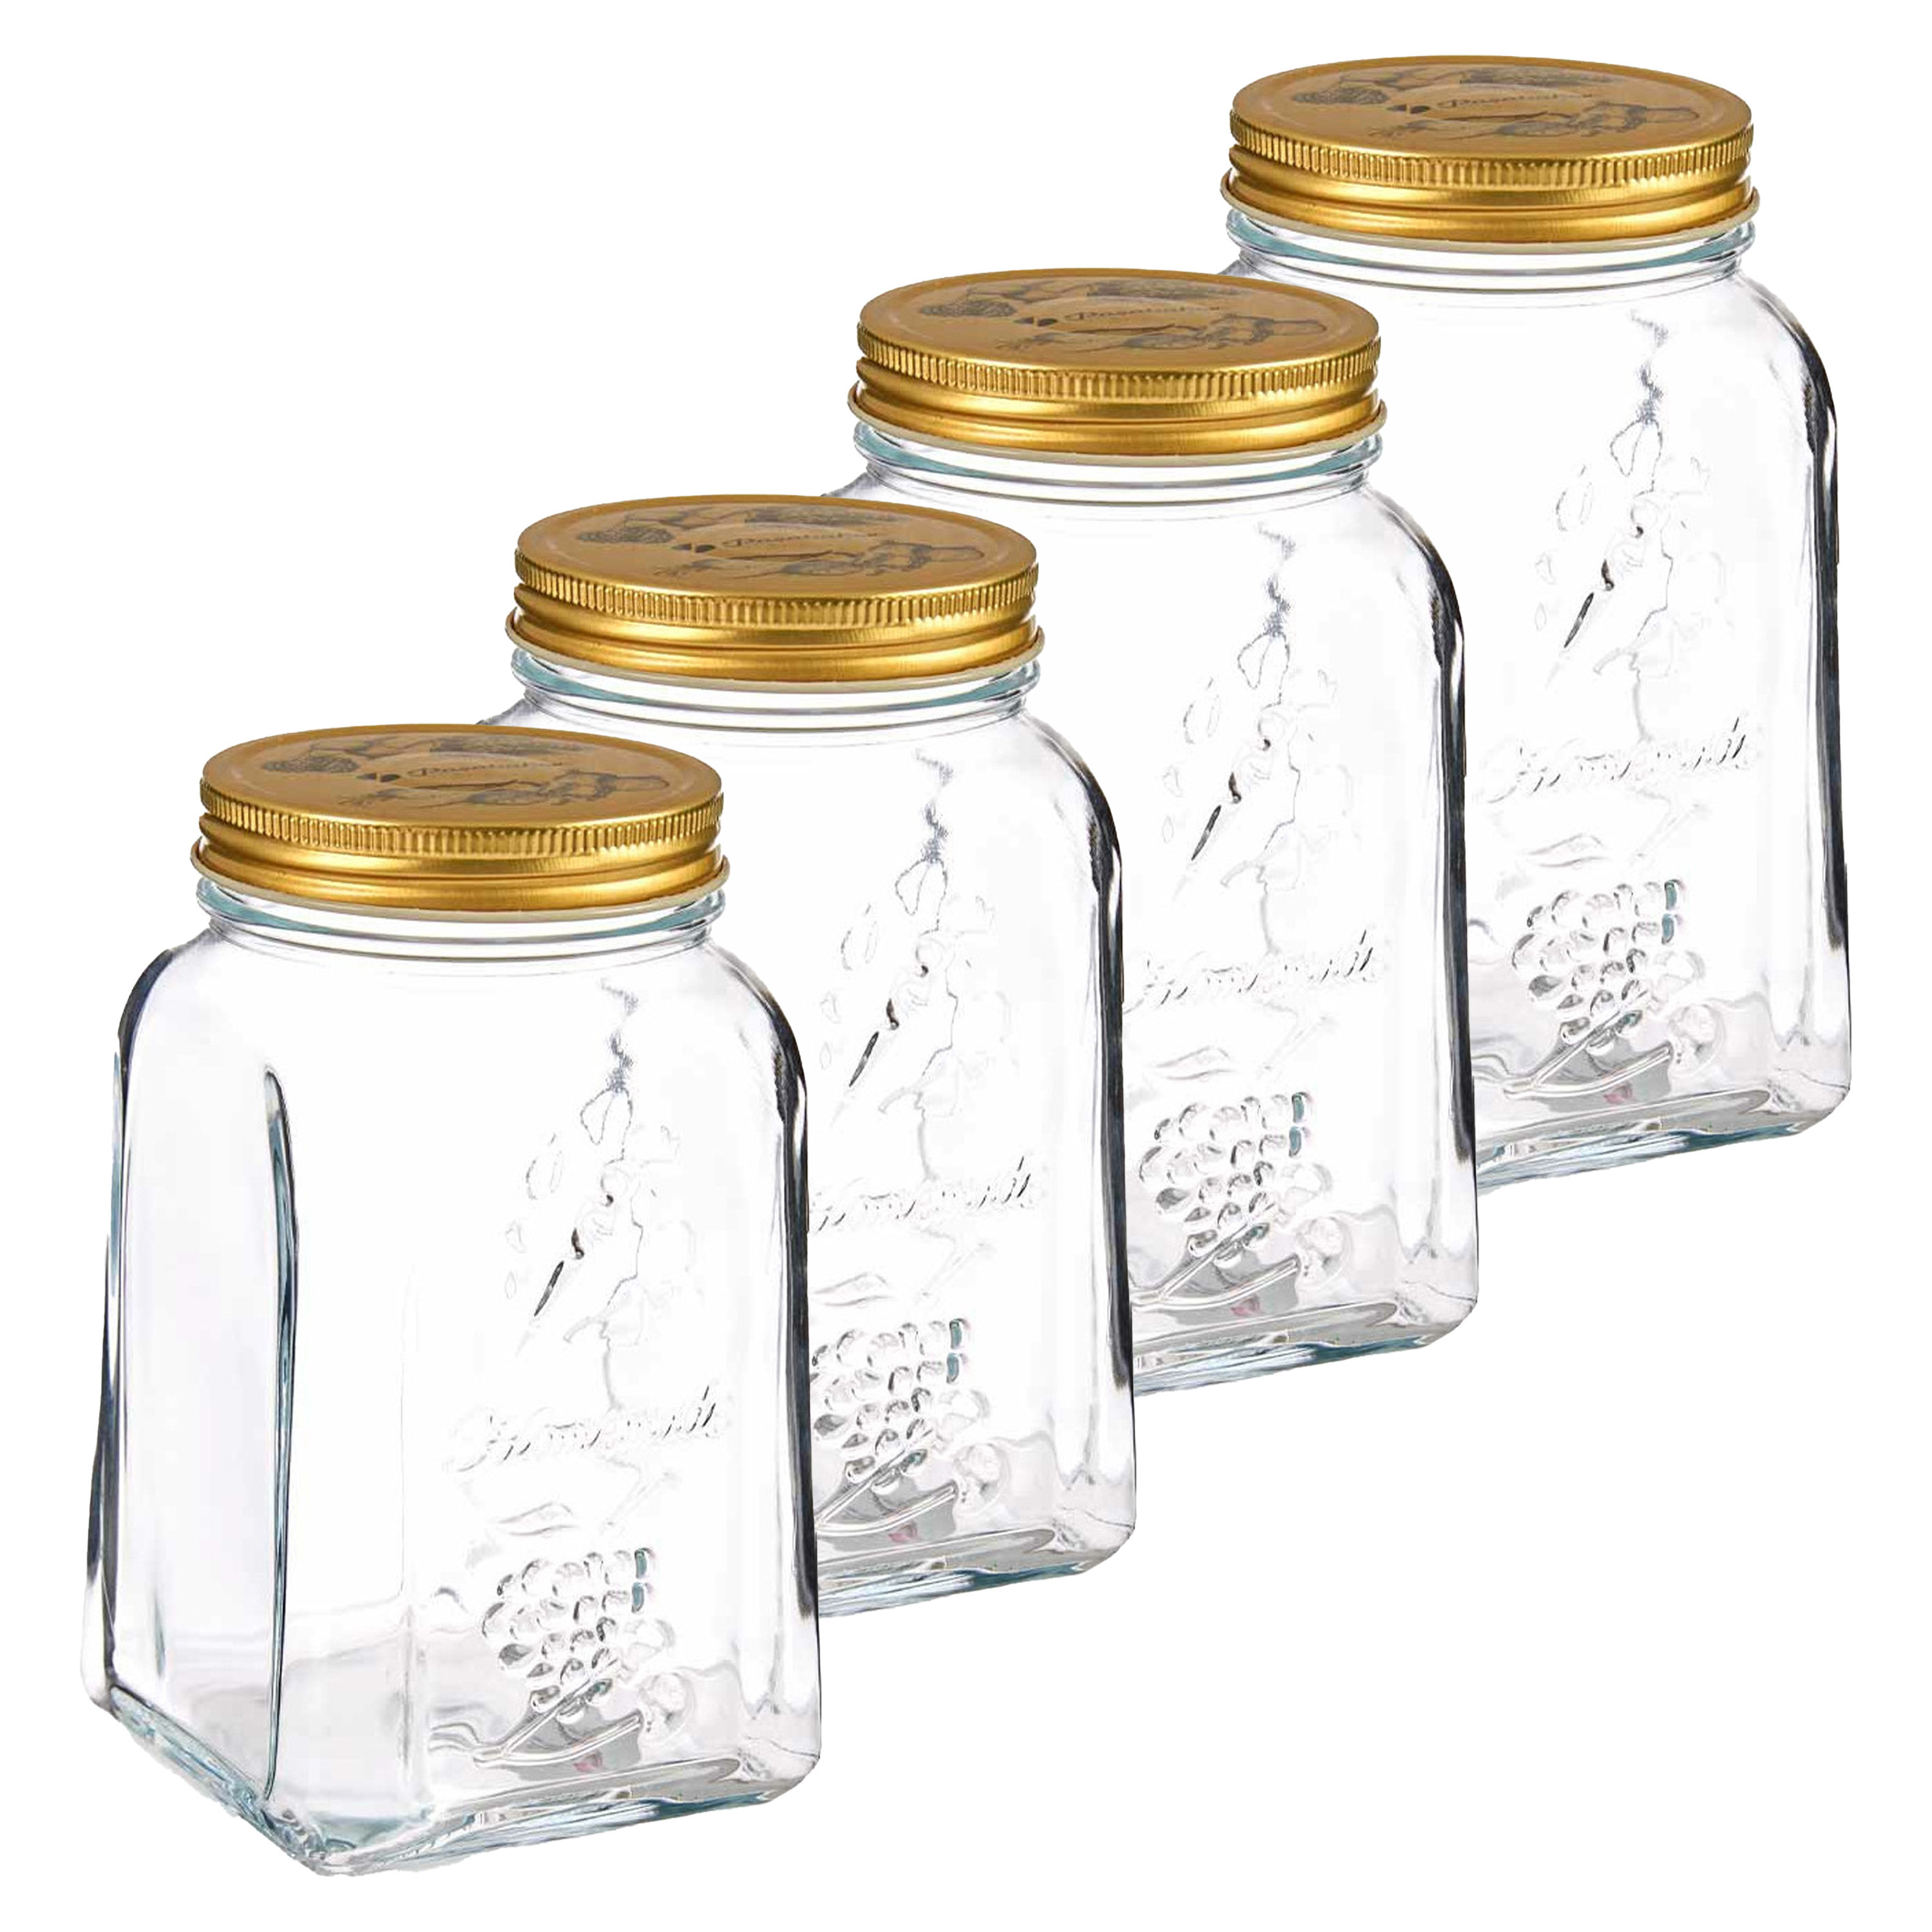 Voorraadpot-bewaarpot Square 4x glas 1L transparant-goud D10 x H17 cm voedsel bewaren